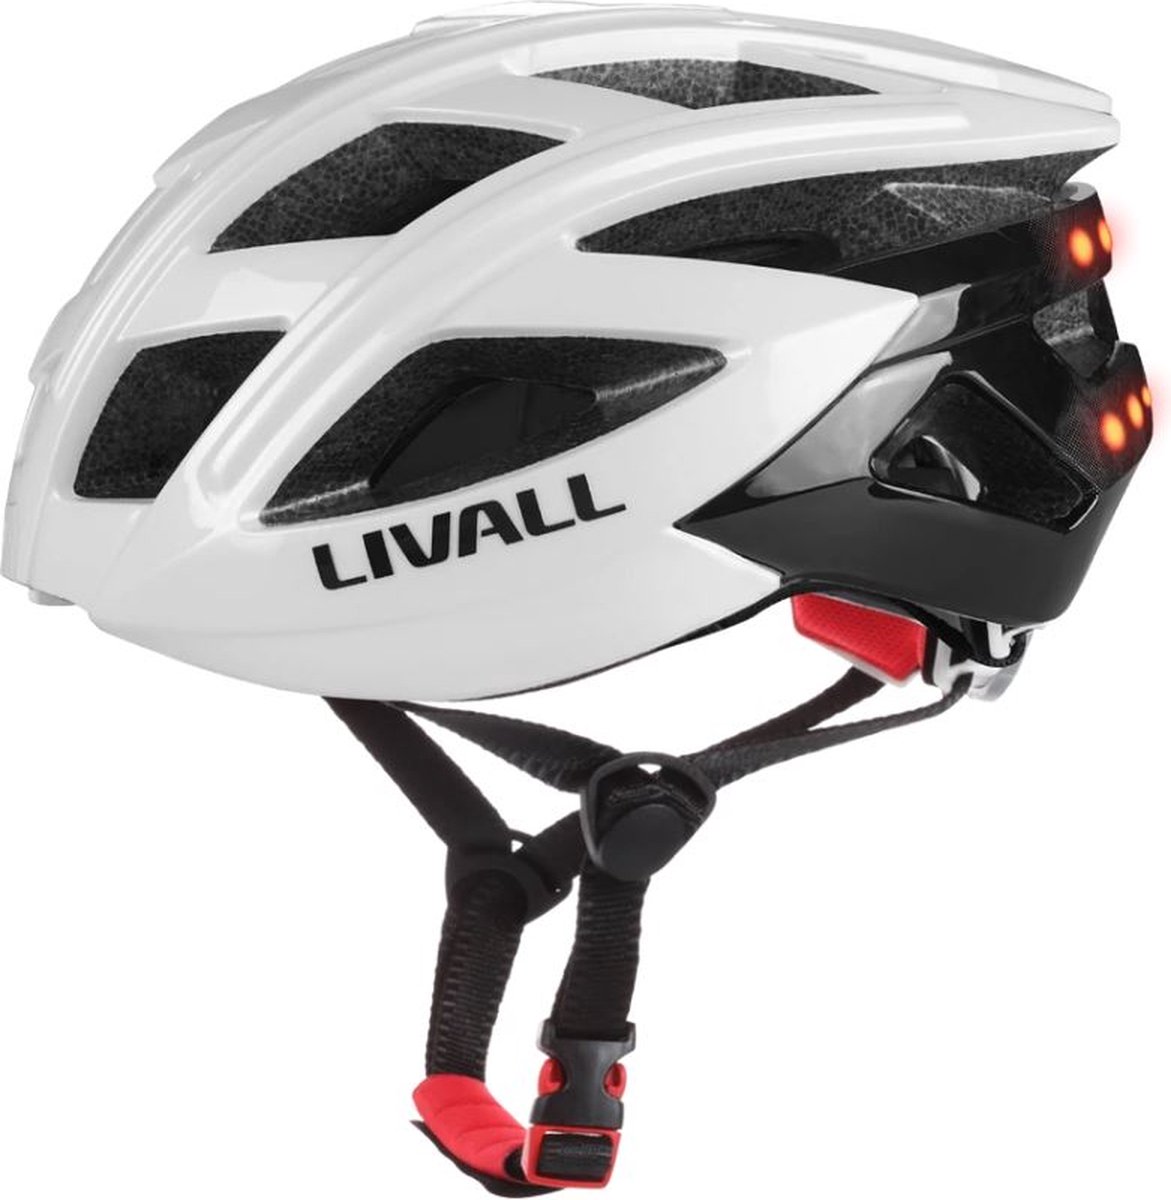 Livall BH60SE Neo White Large - (Smart) fietshelm - SOS functie - LED richtingaanwijzers - Smart verlichting